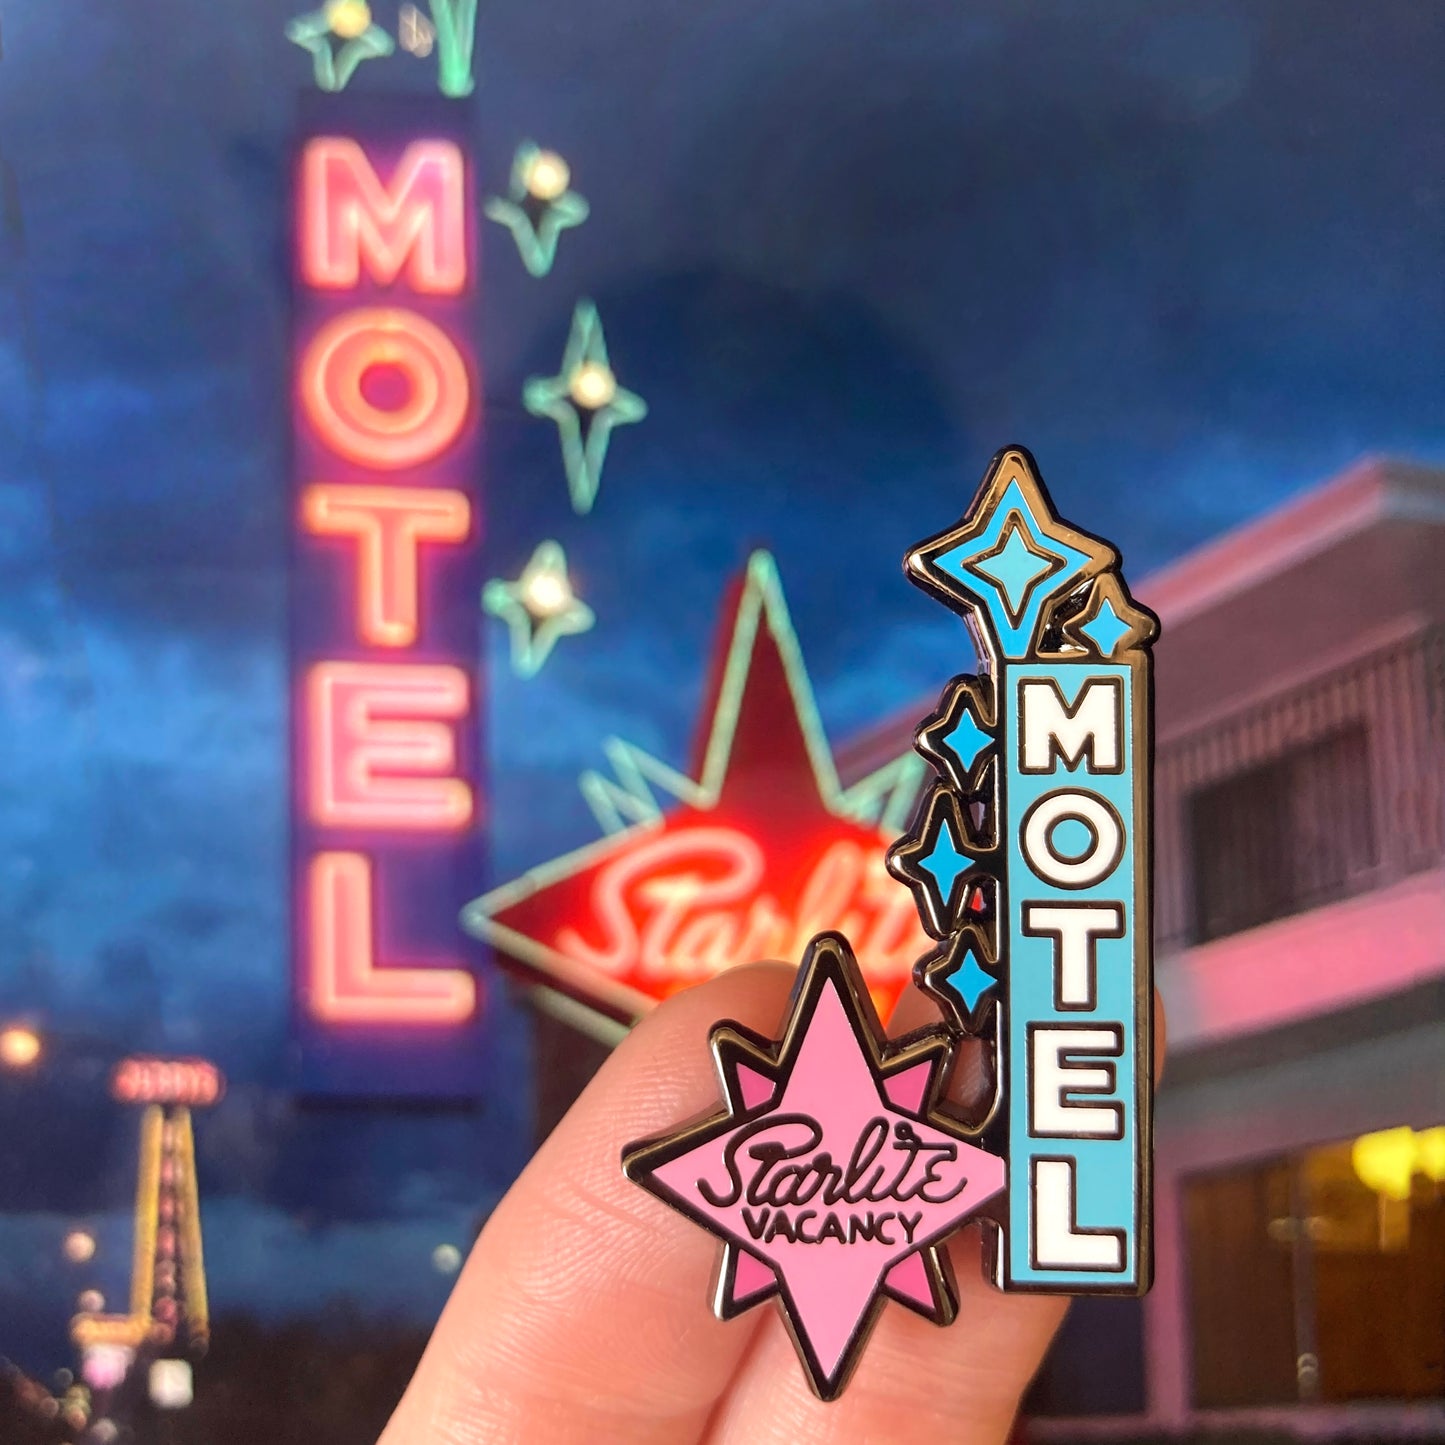 Starlite Motel Pin